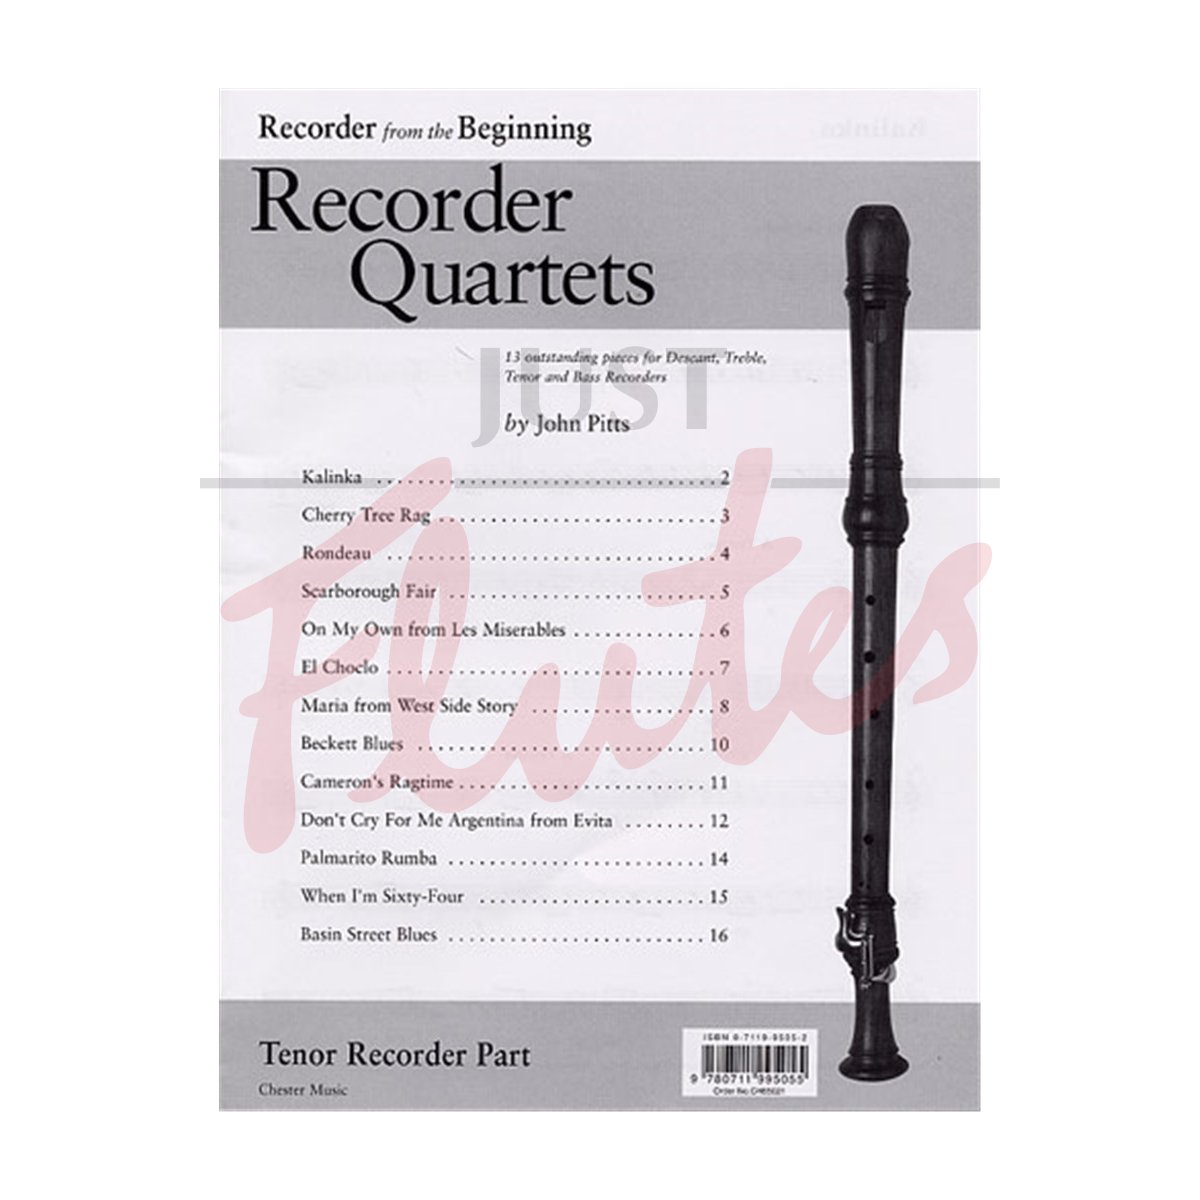 Recorder from the Beginning: Recorder Quartets, Tenor Recorder Part